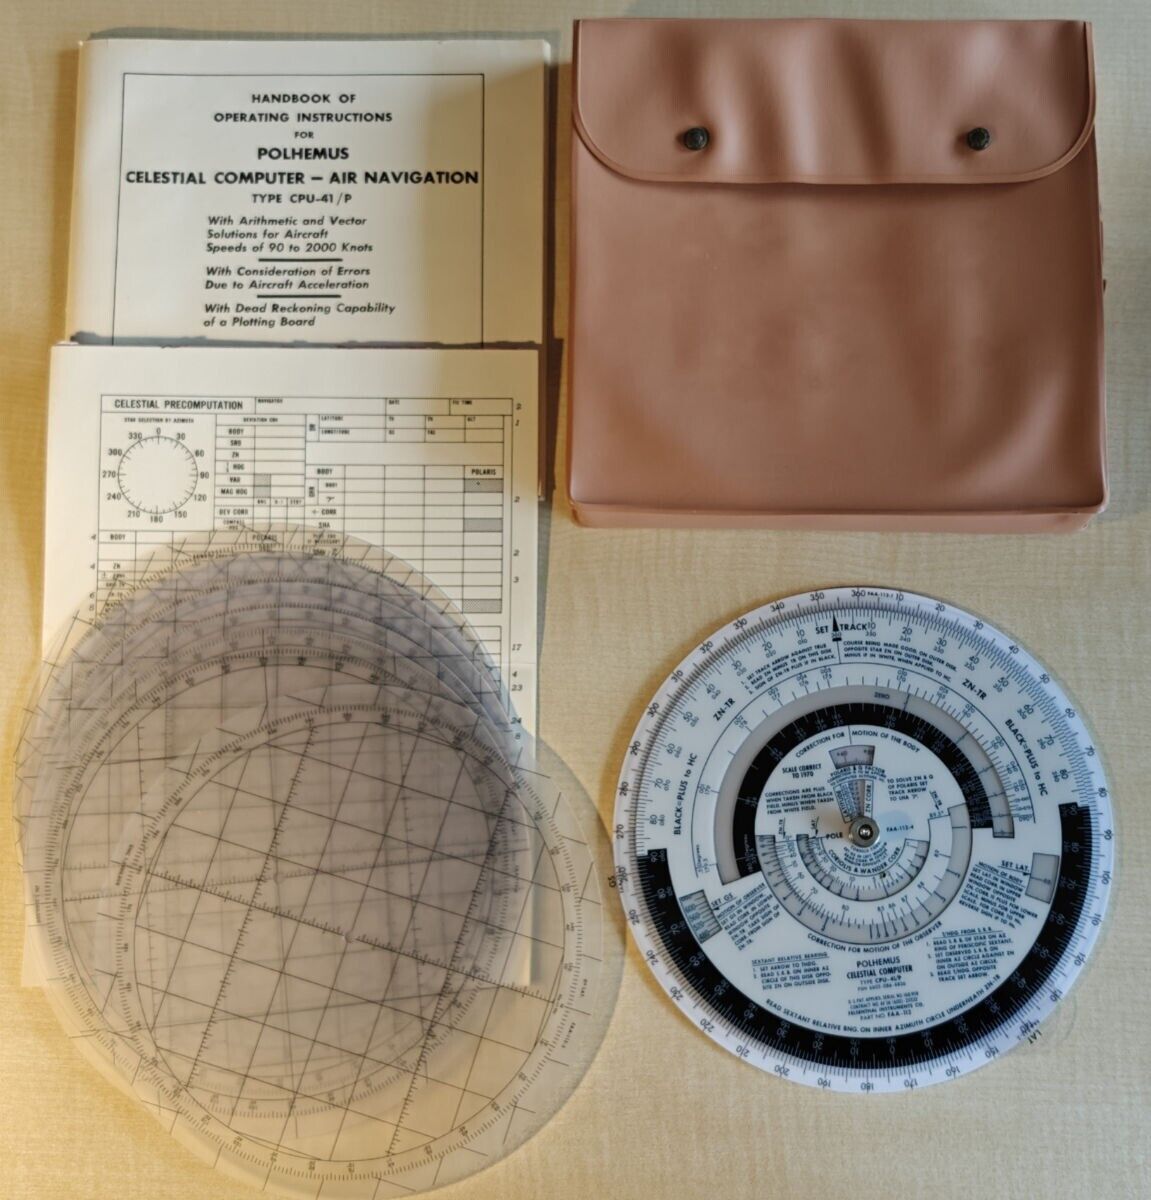 Vintage Polhemus Celestial Computer – Air Navigation Type CPU-41/P